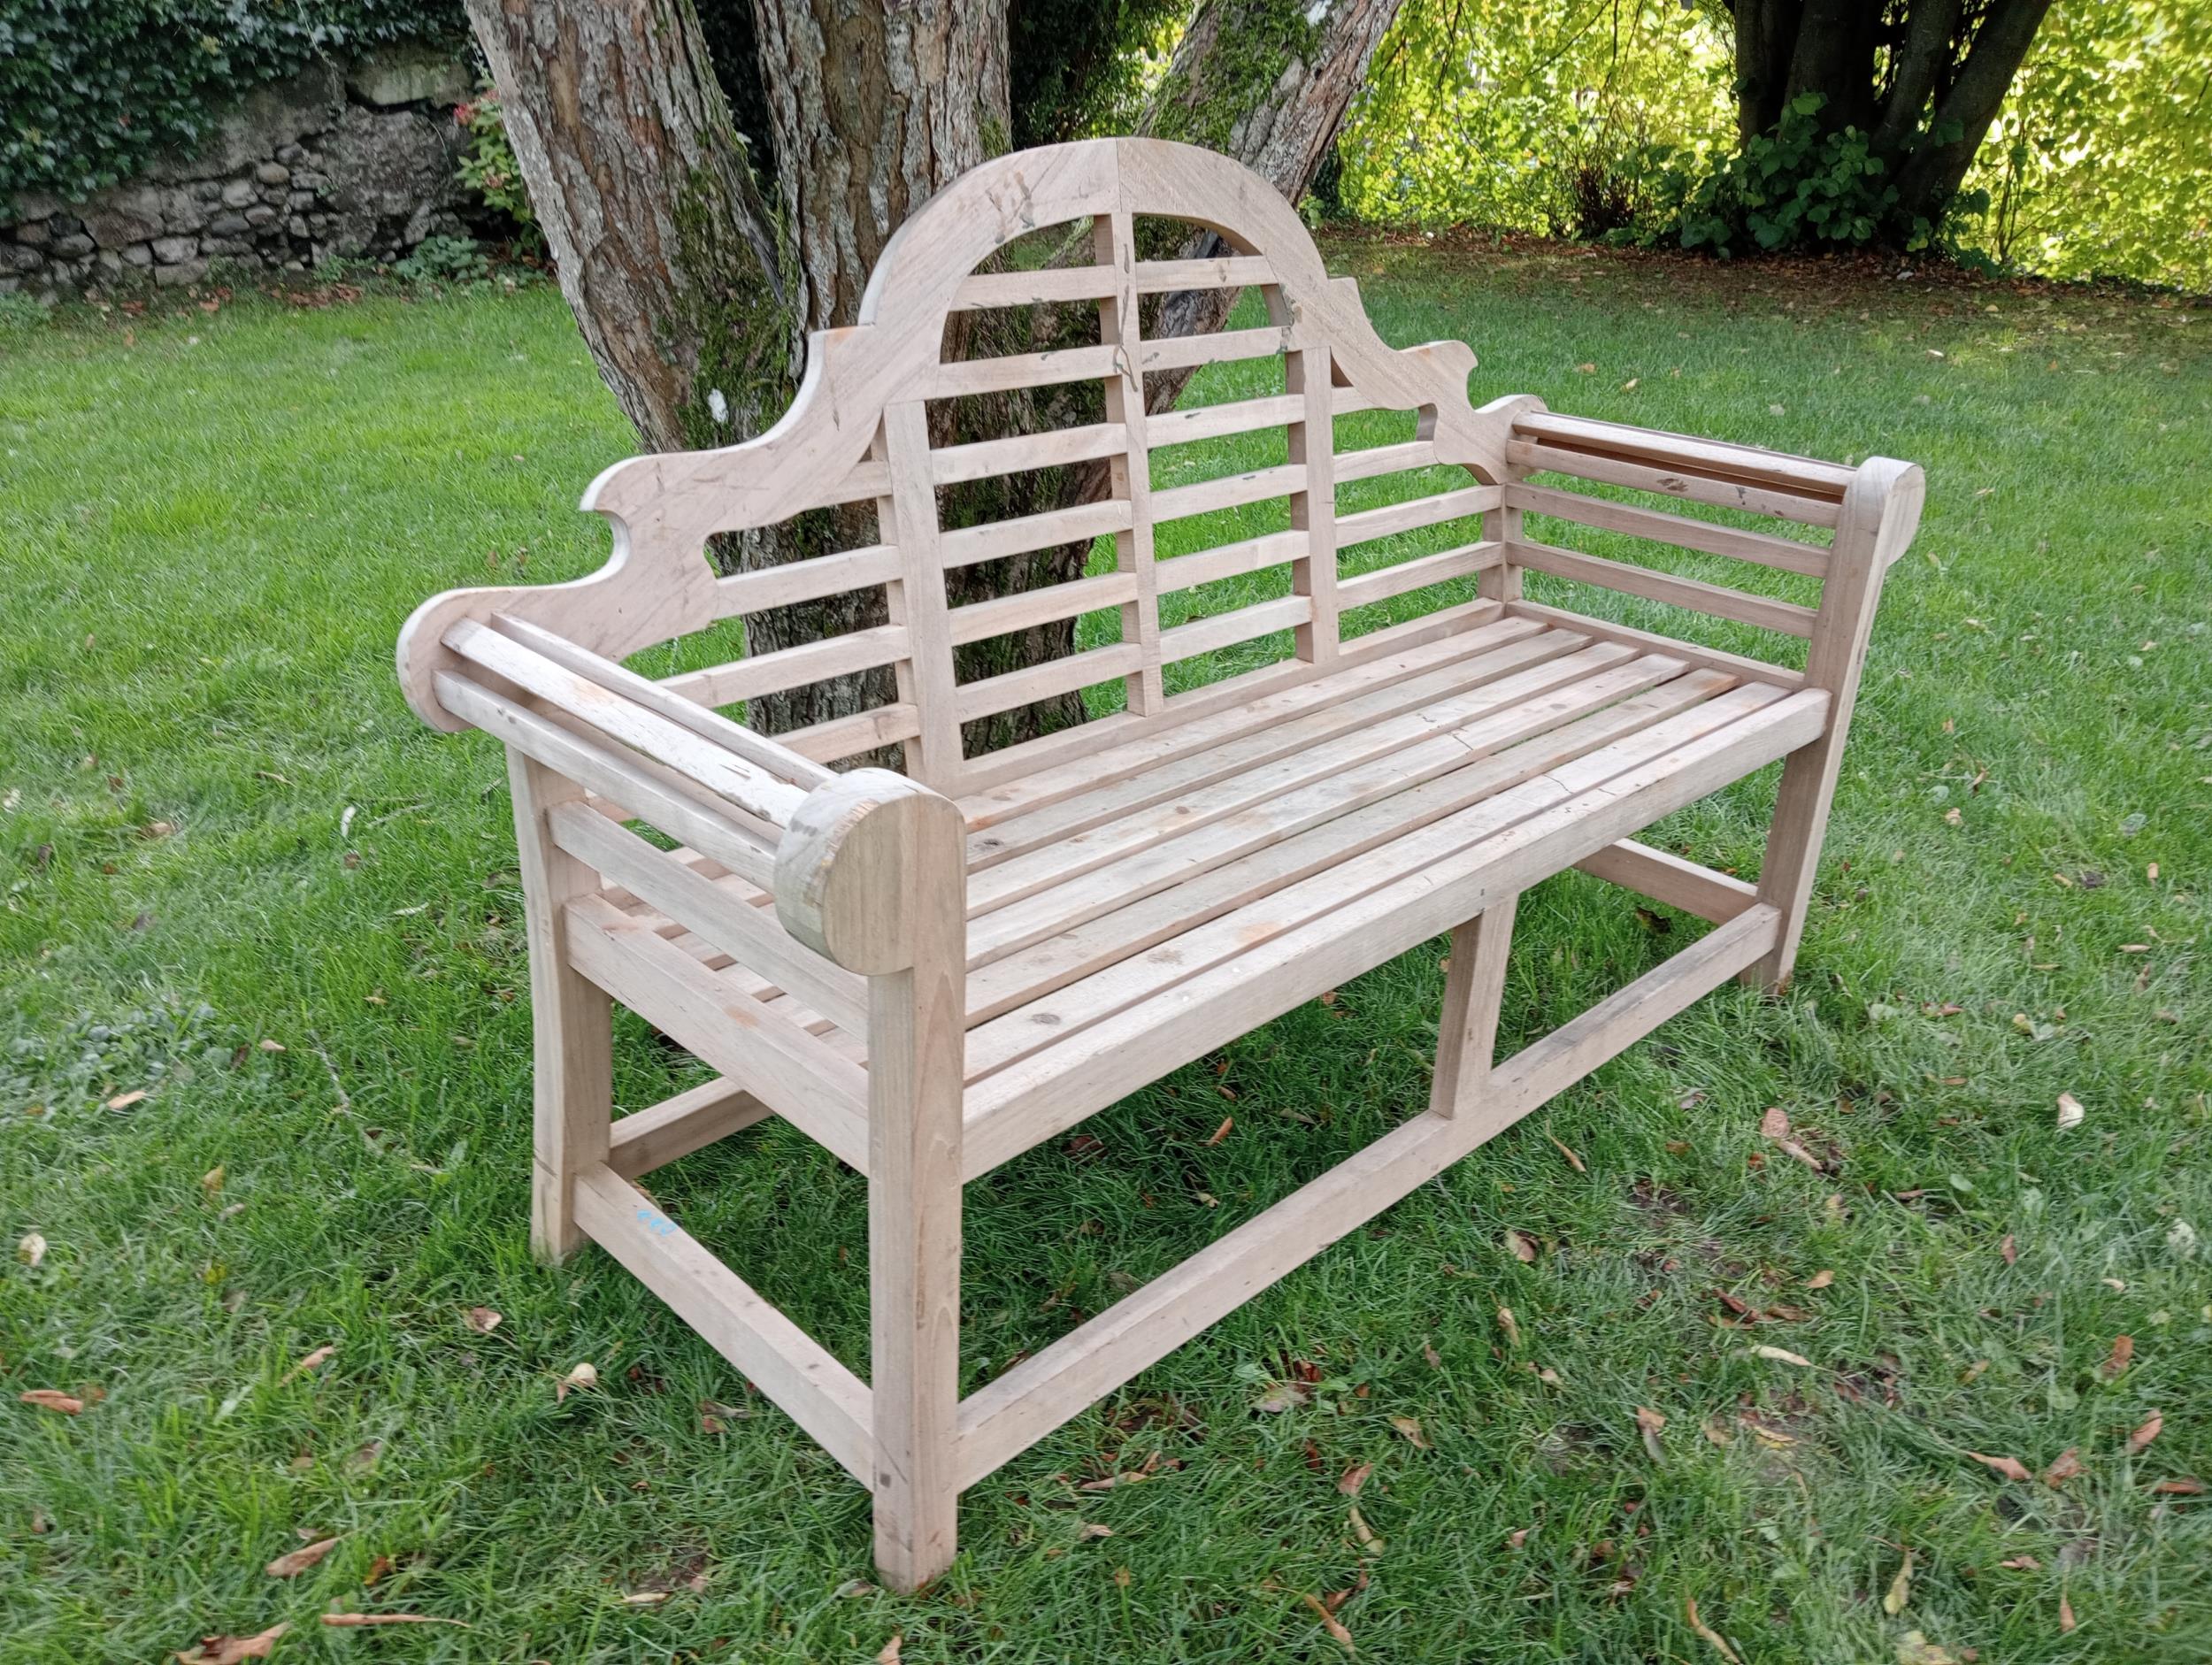 Teak Marlborough garden bench {H 100cm x W 166cm x D 60cm }. - Image 2 of 3